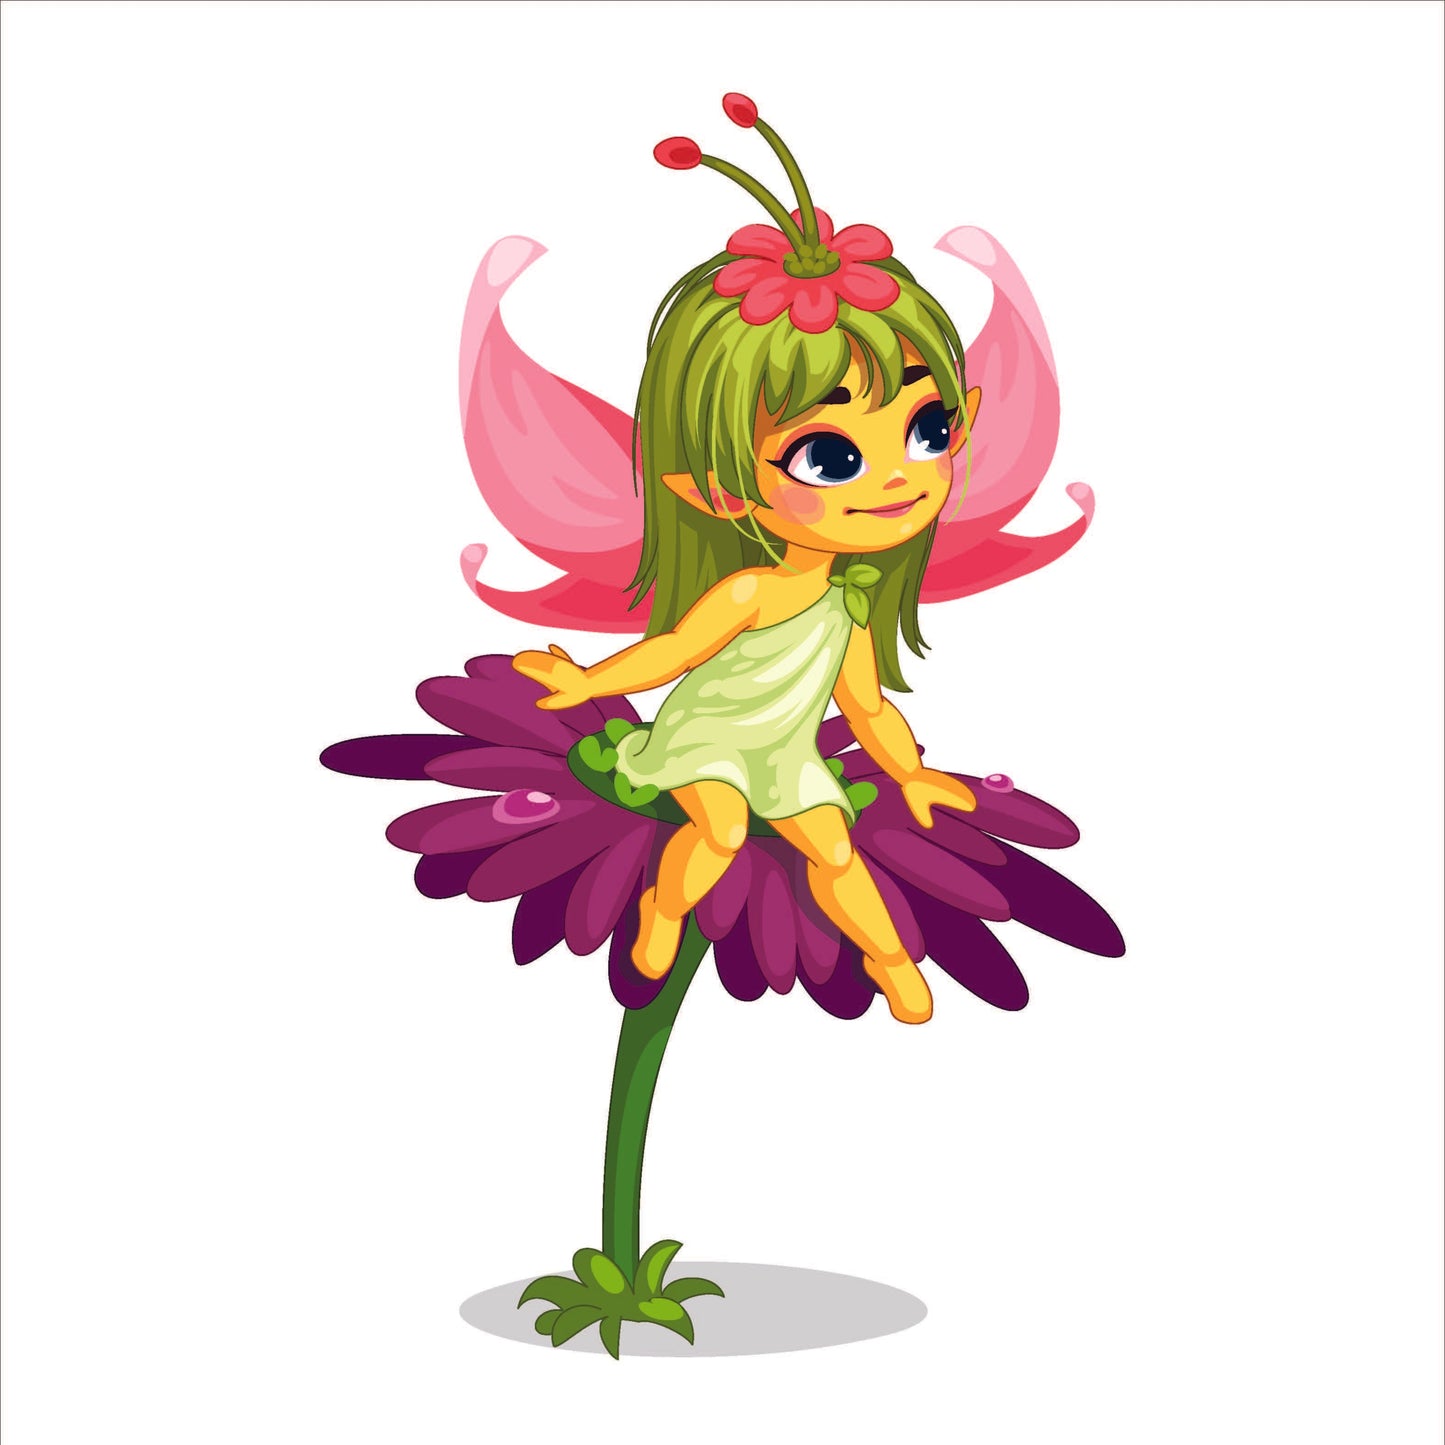 Fairy Sitting On a Flower